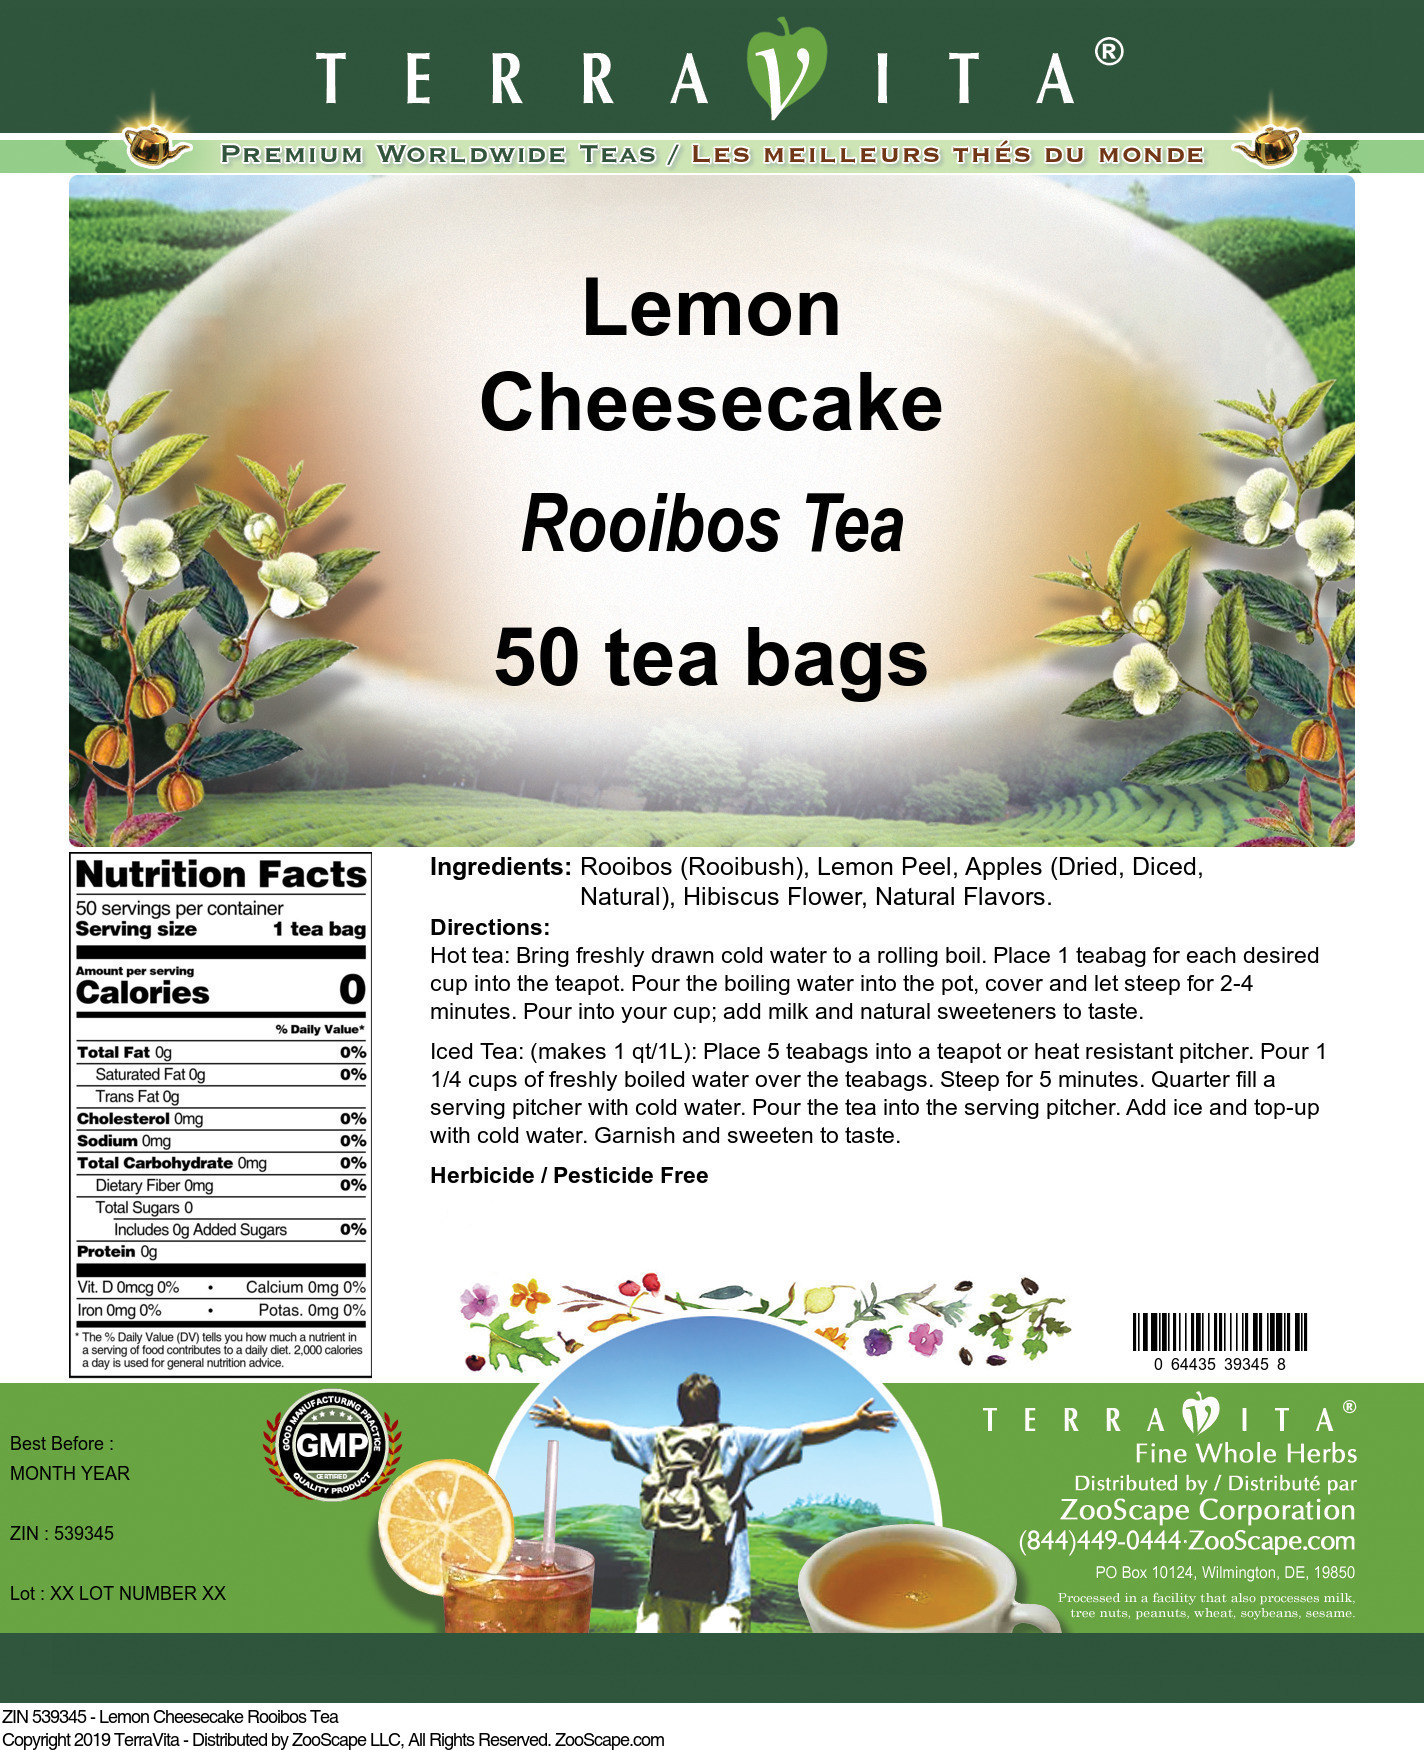 Lemon Cheesecake Rooibos Tea - Label